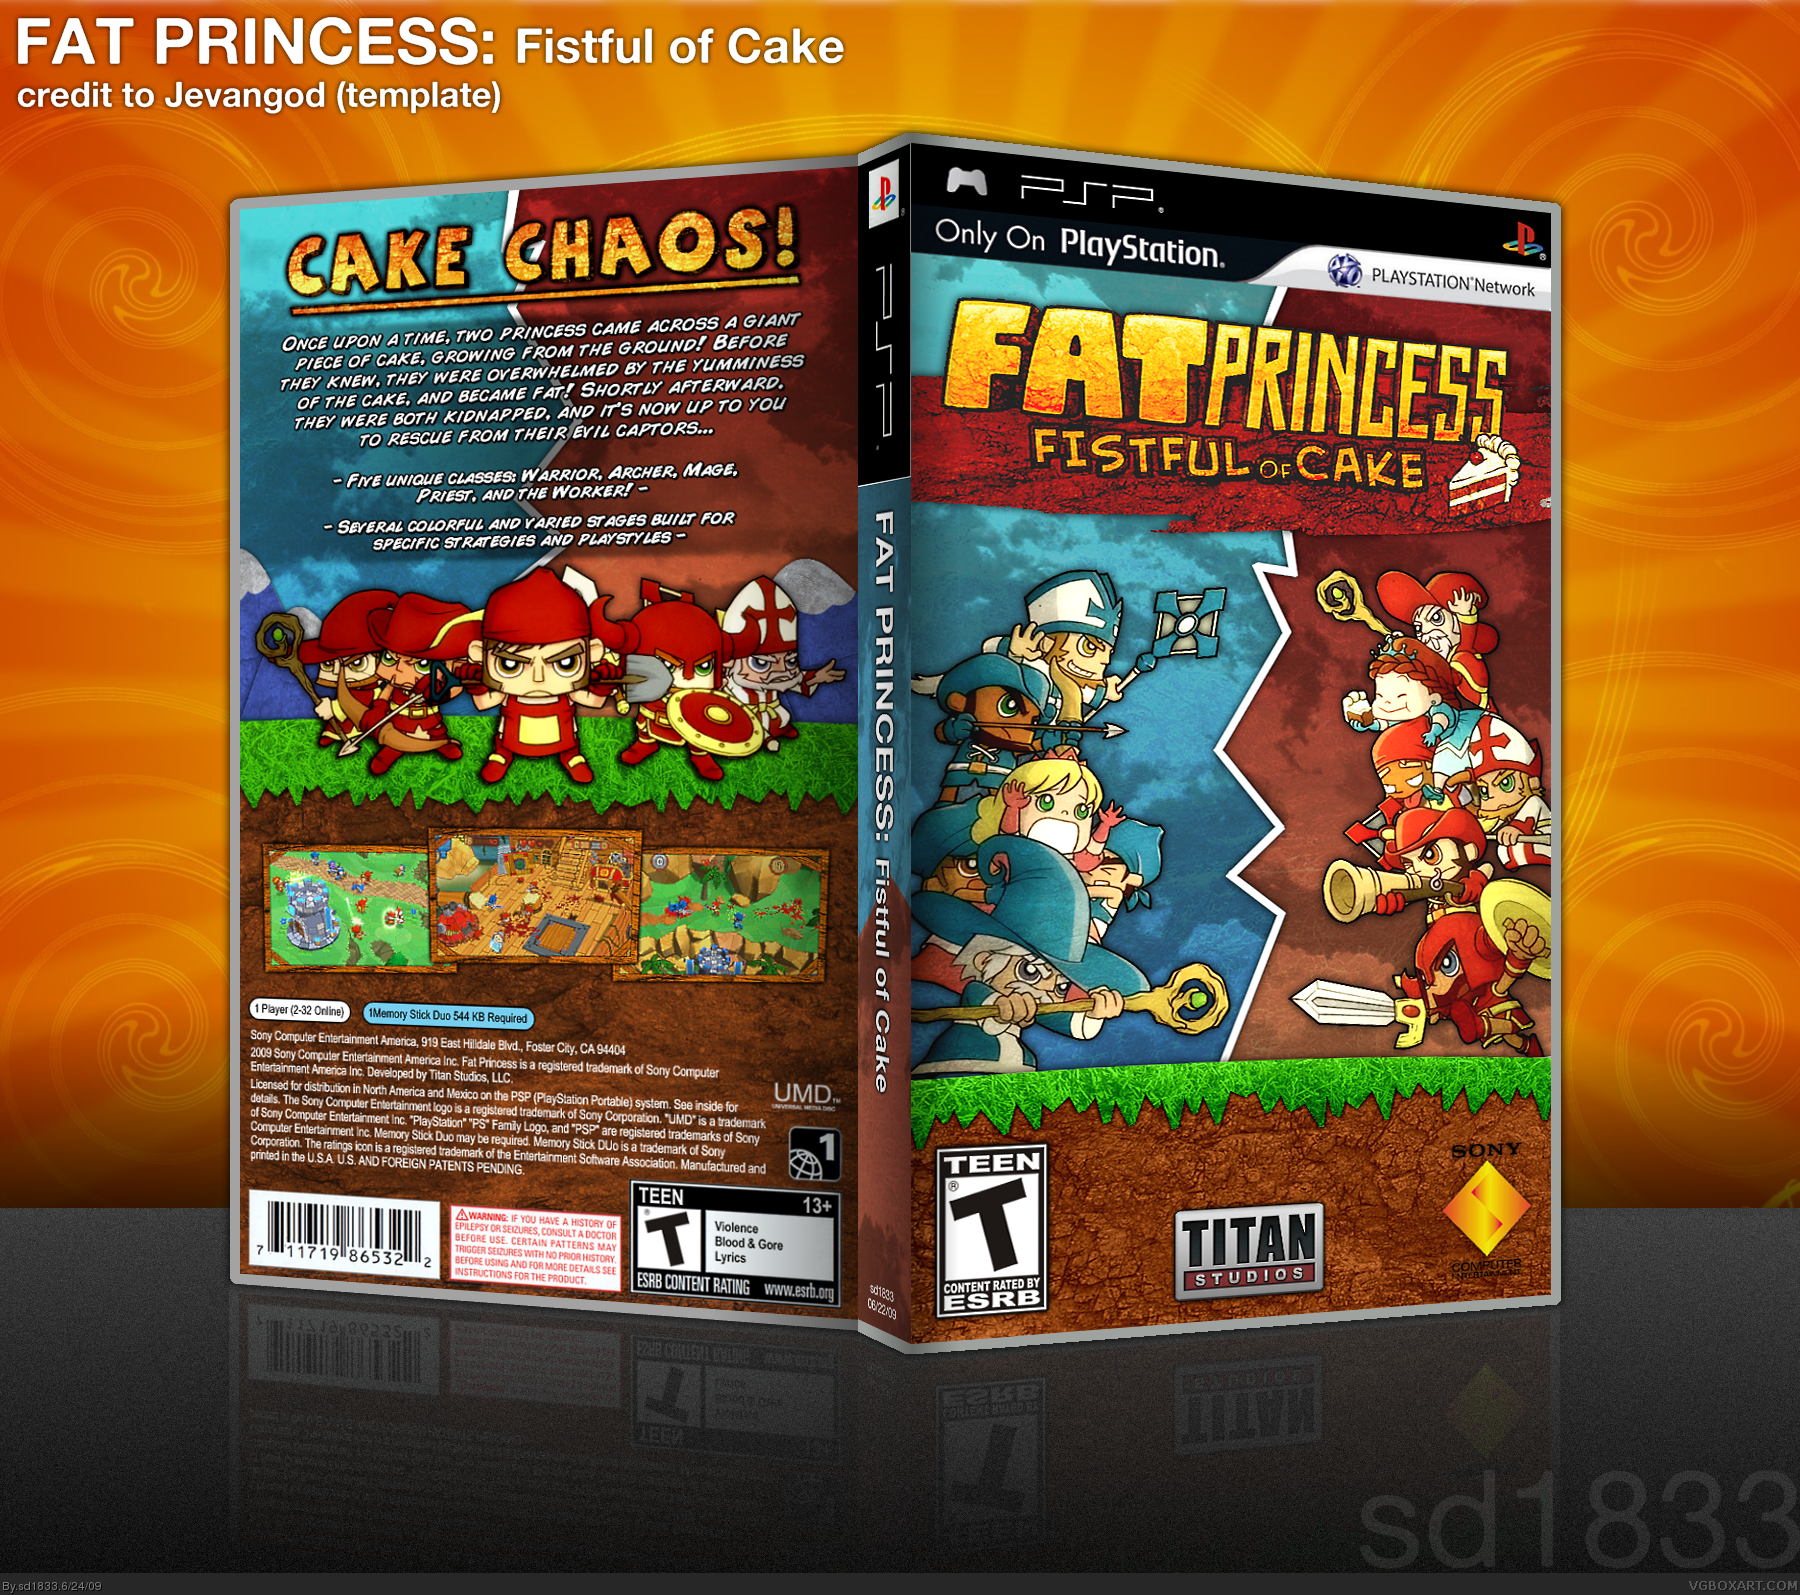 Fat Princess: Fistful of Cake box cover